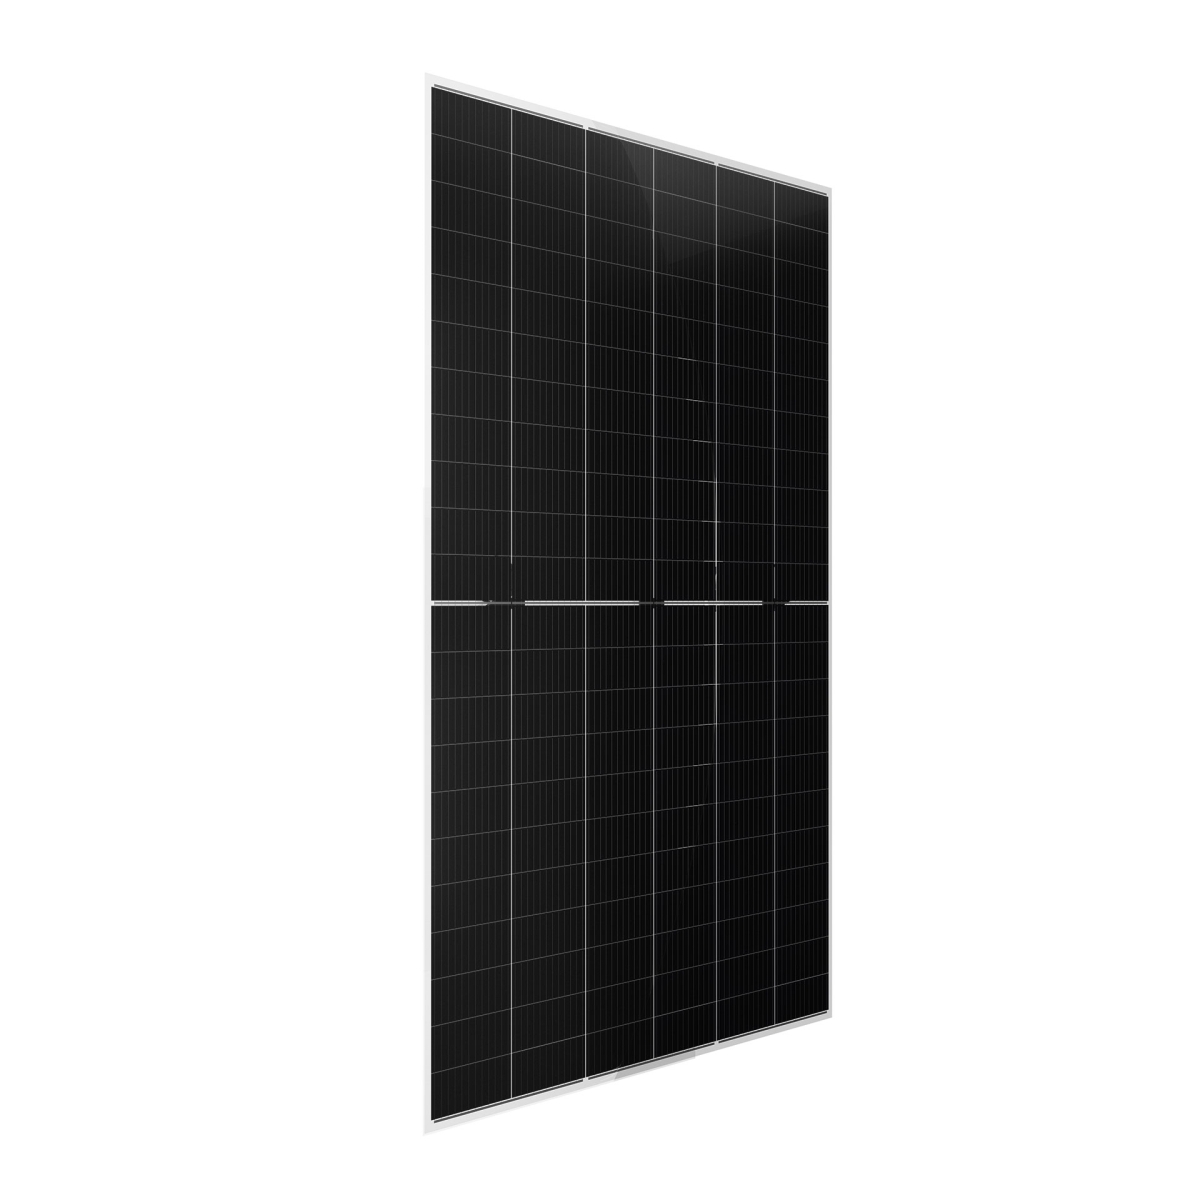 CW Enerji 660Wp M12 132PM Cells Bifacial G2G Half-Cut MB Solar Panel